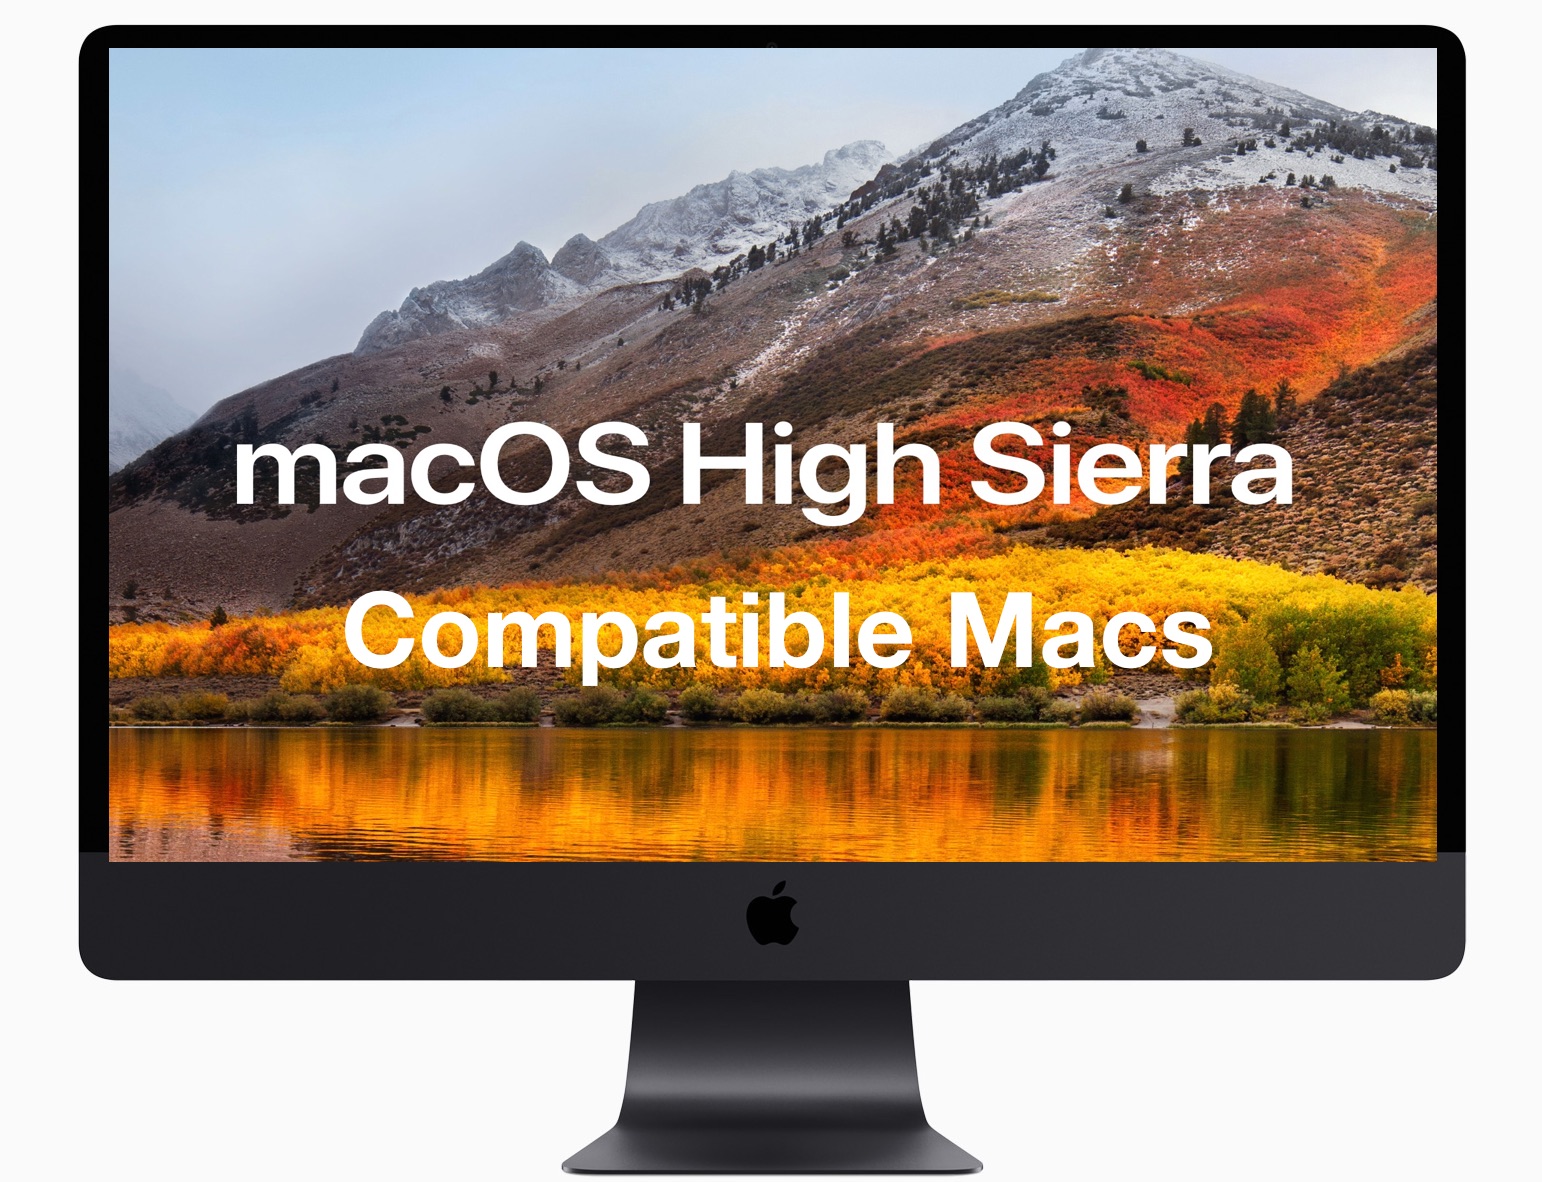 microsoft word for mac sierra